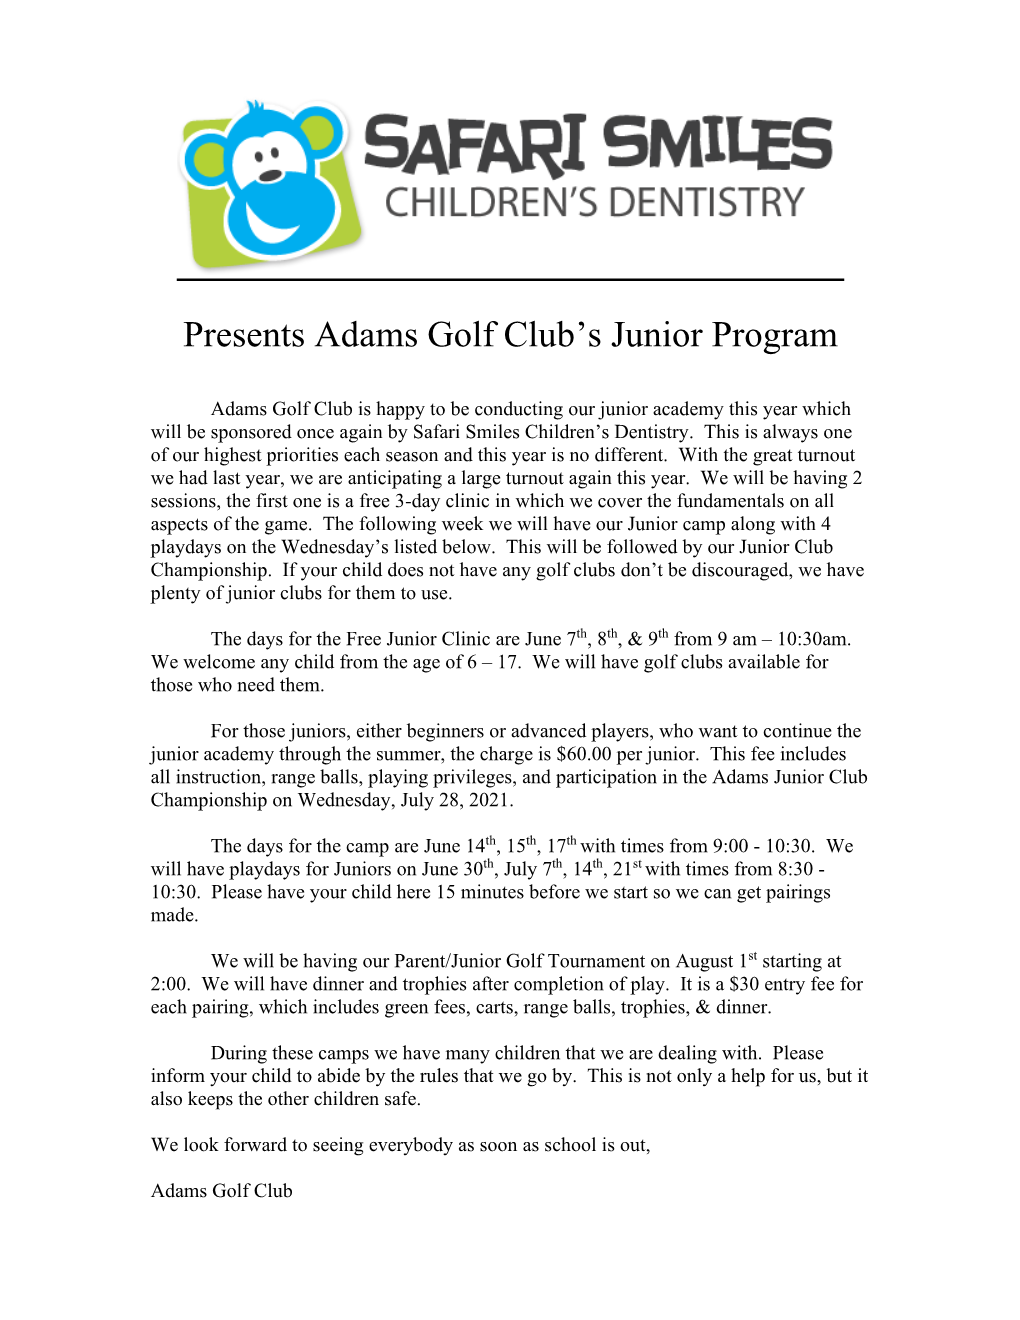 2021 Adams Safari Junior Golf